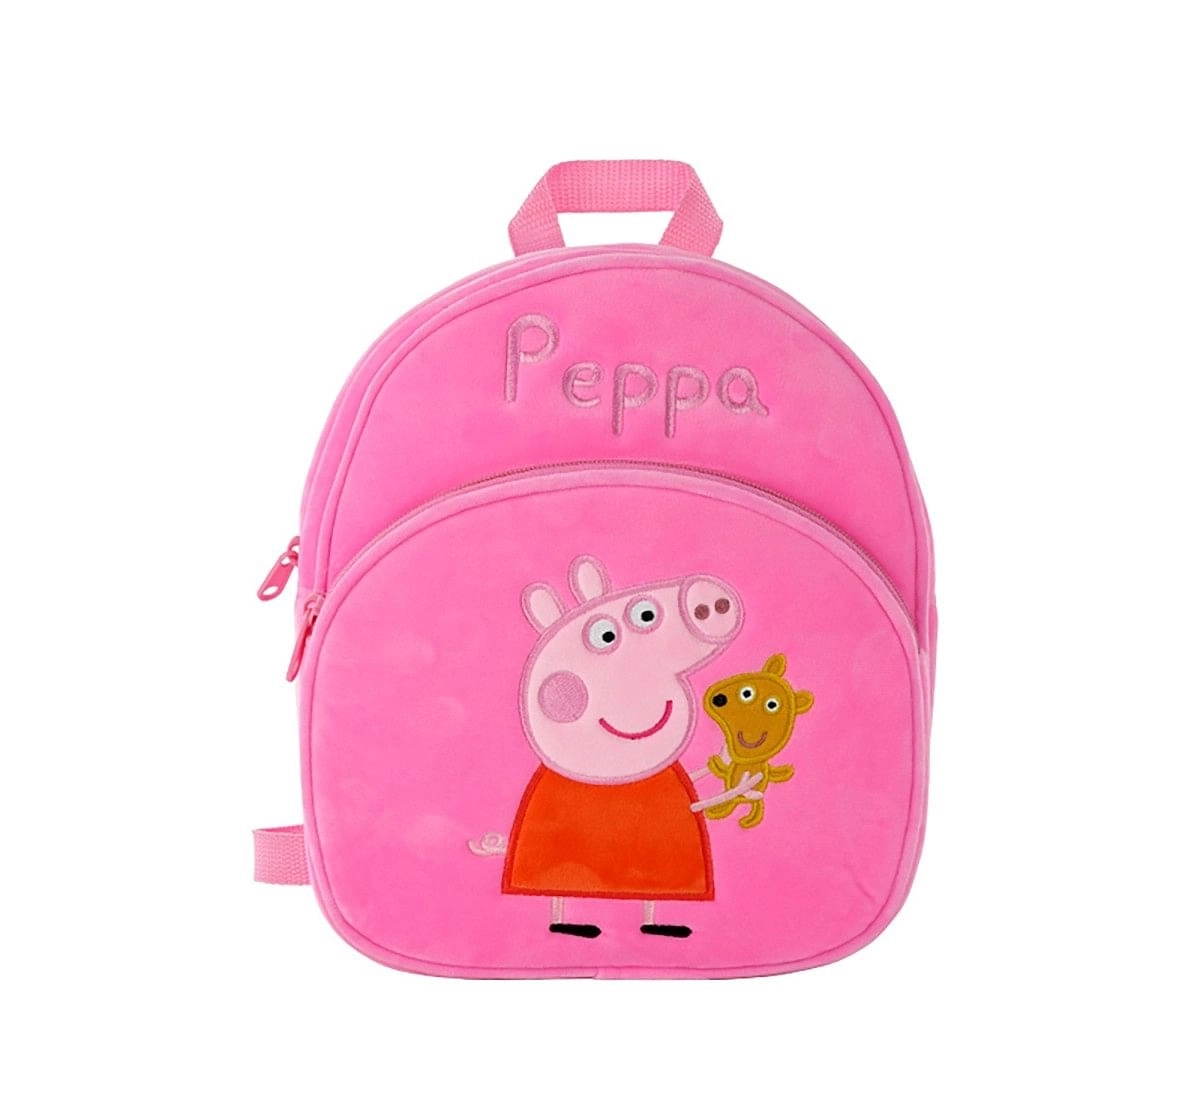 Peppa Pig Bag Plush Accessory for age 1Y+ - 28 Cm (Pink)